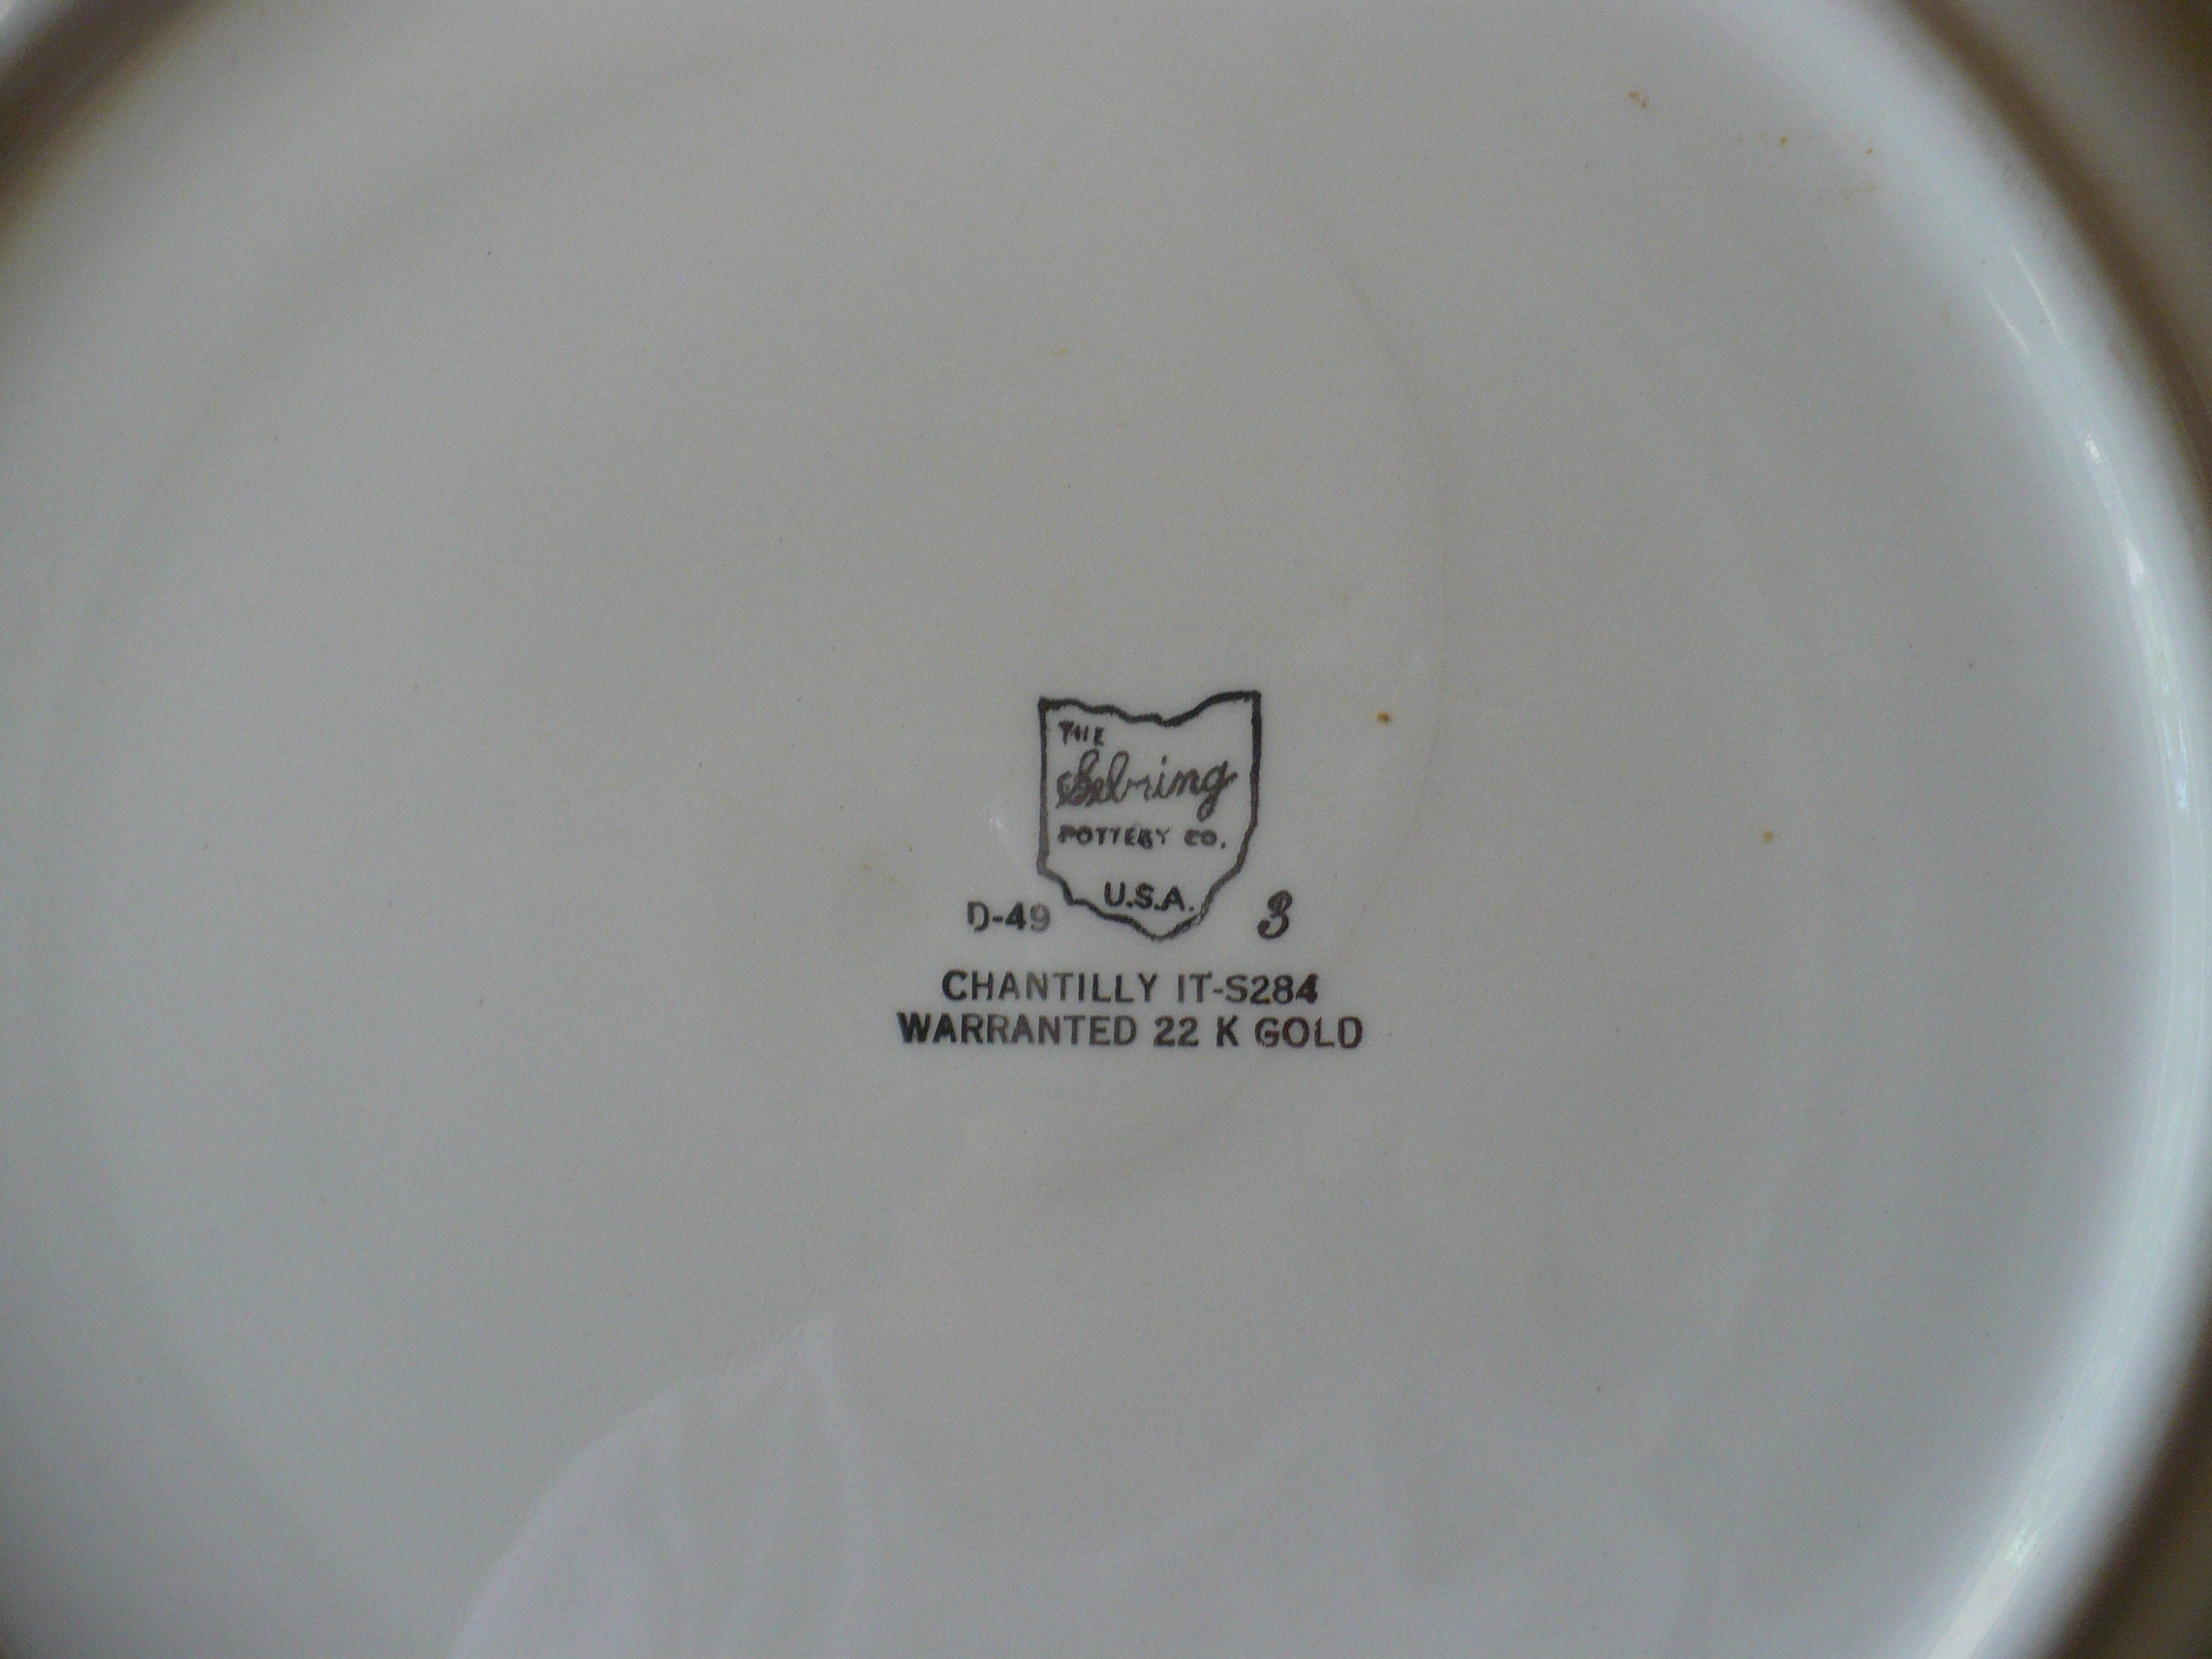 Sebring Pottery Co Chantilly Serving Platter Vintage China | Etsy